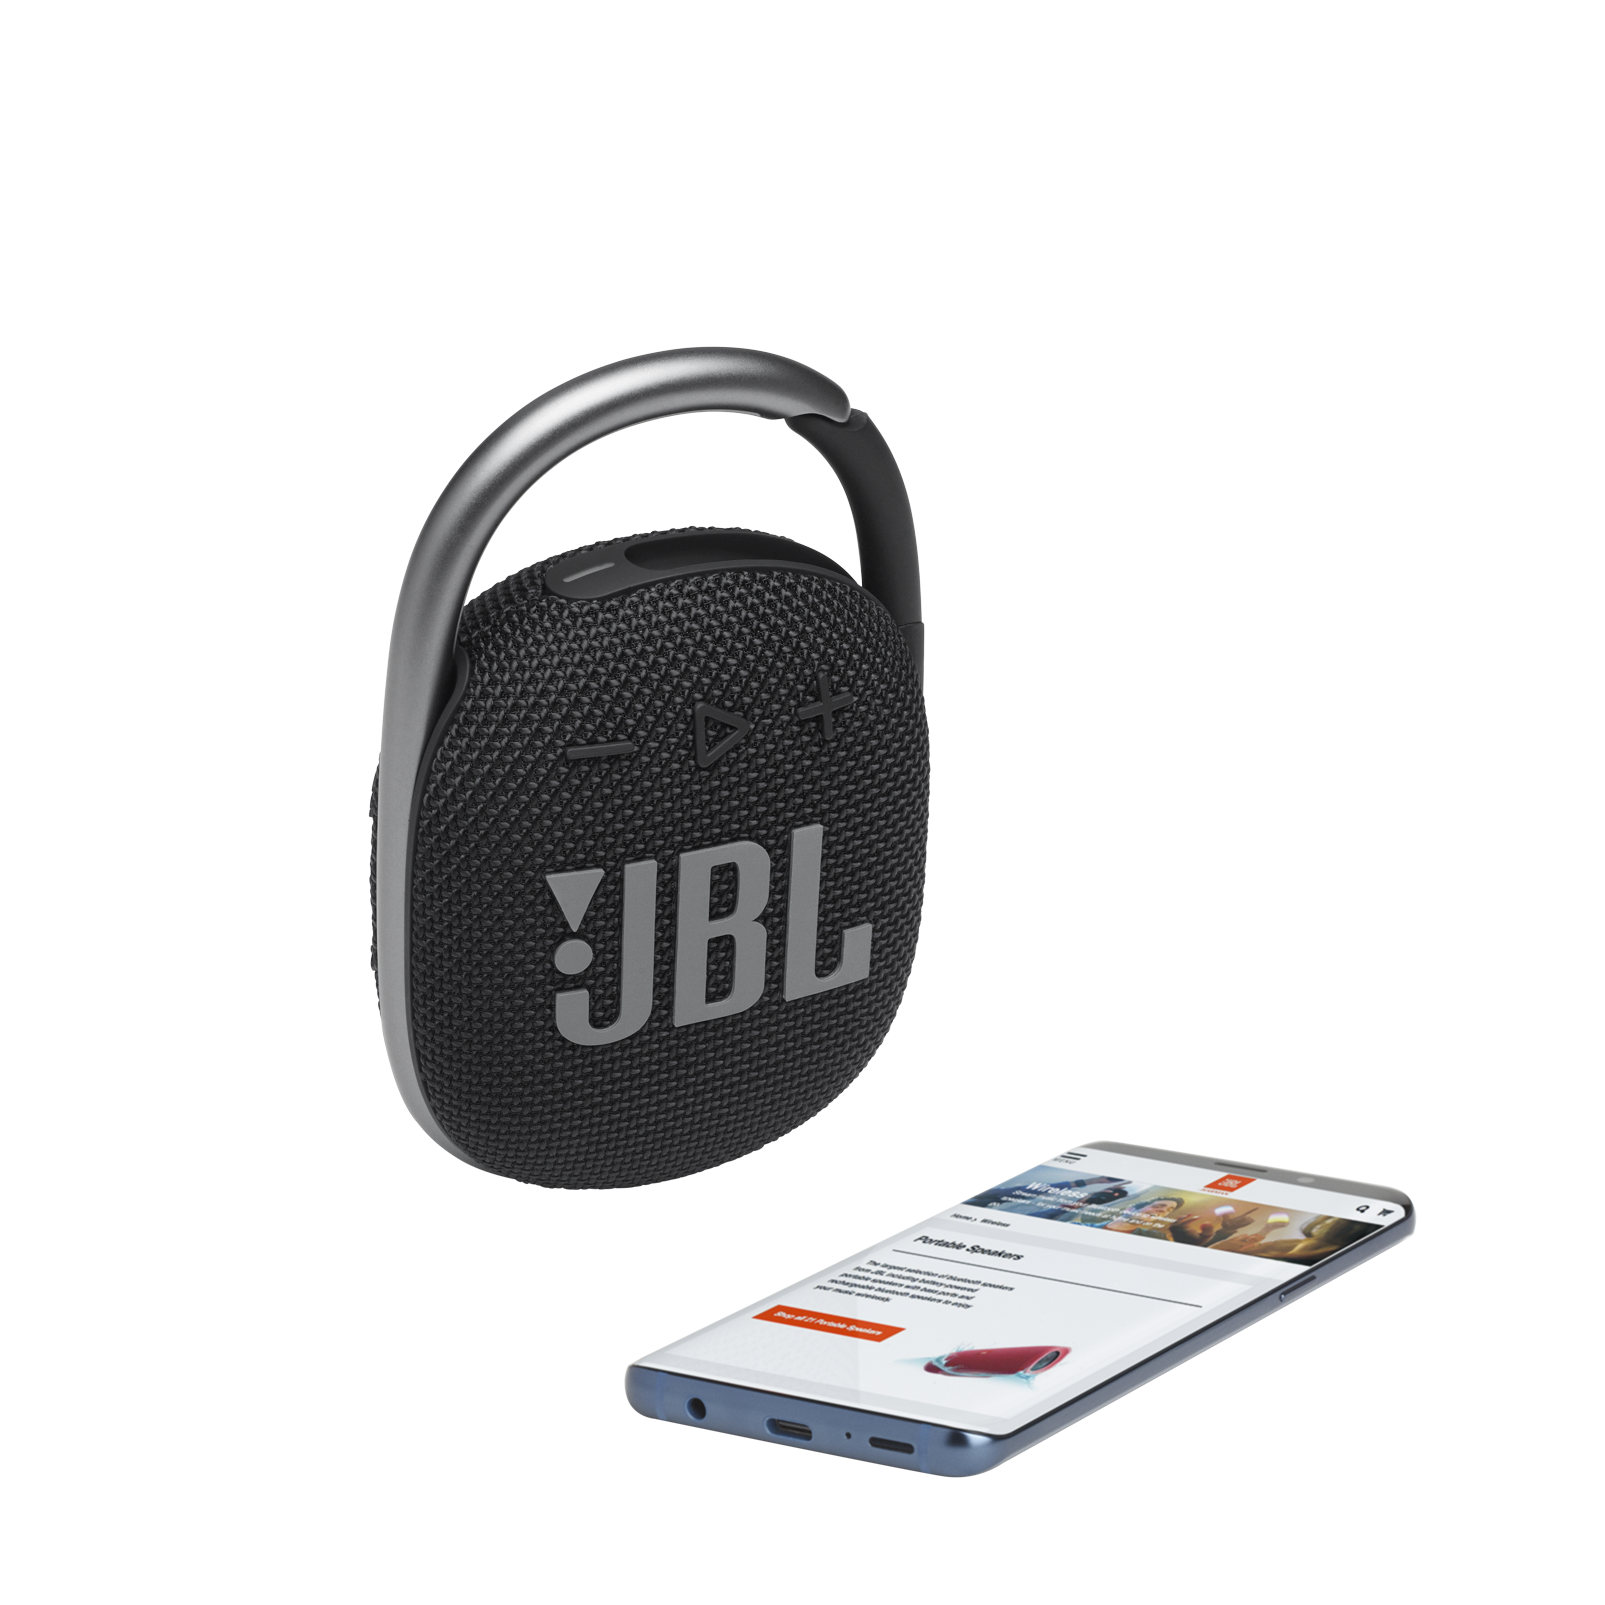 JBL Clip 4 - Black - Ultra-portable Waterproof Speaker - Detailshot 1